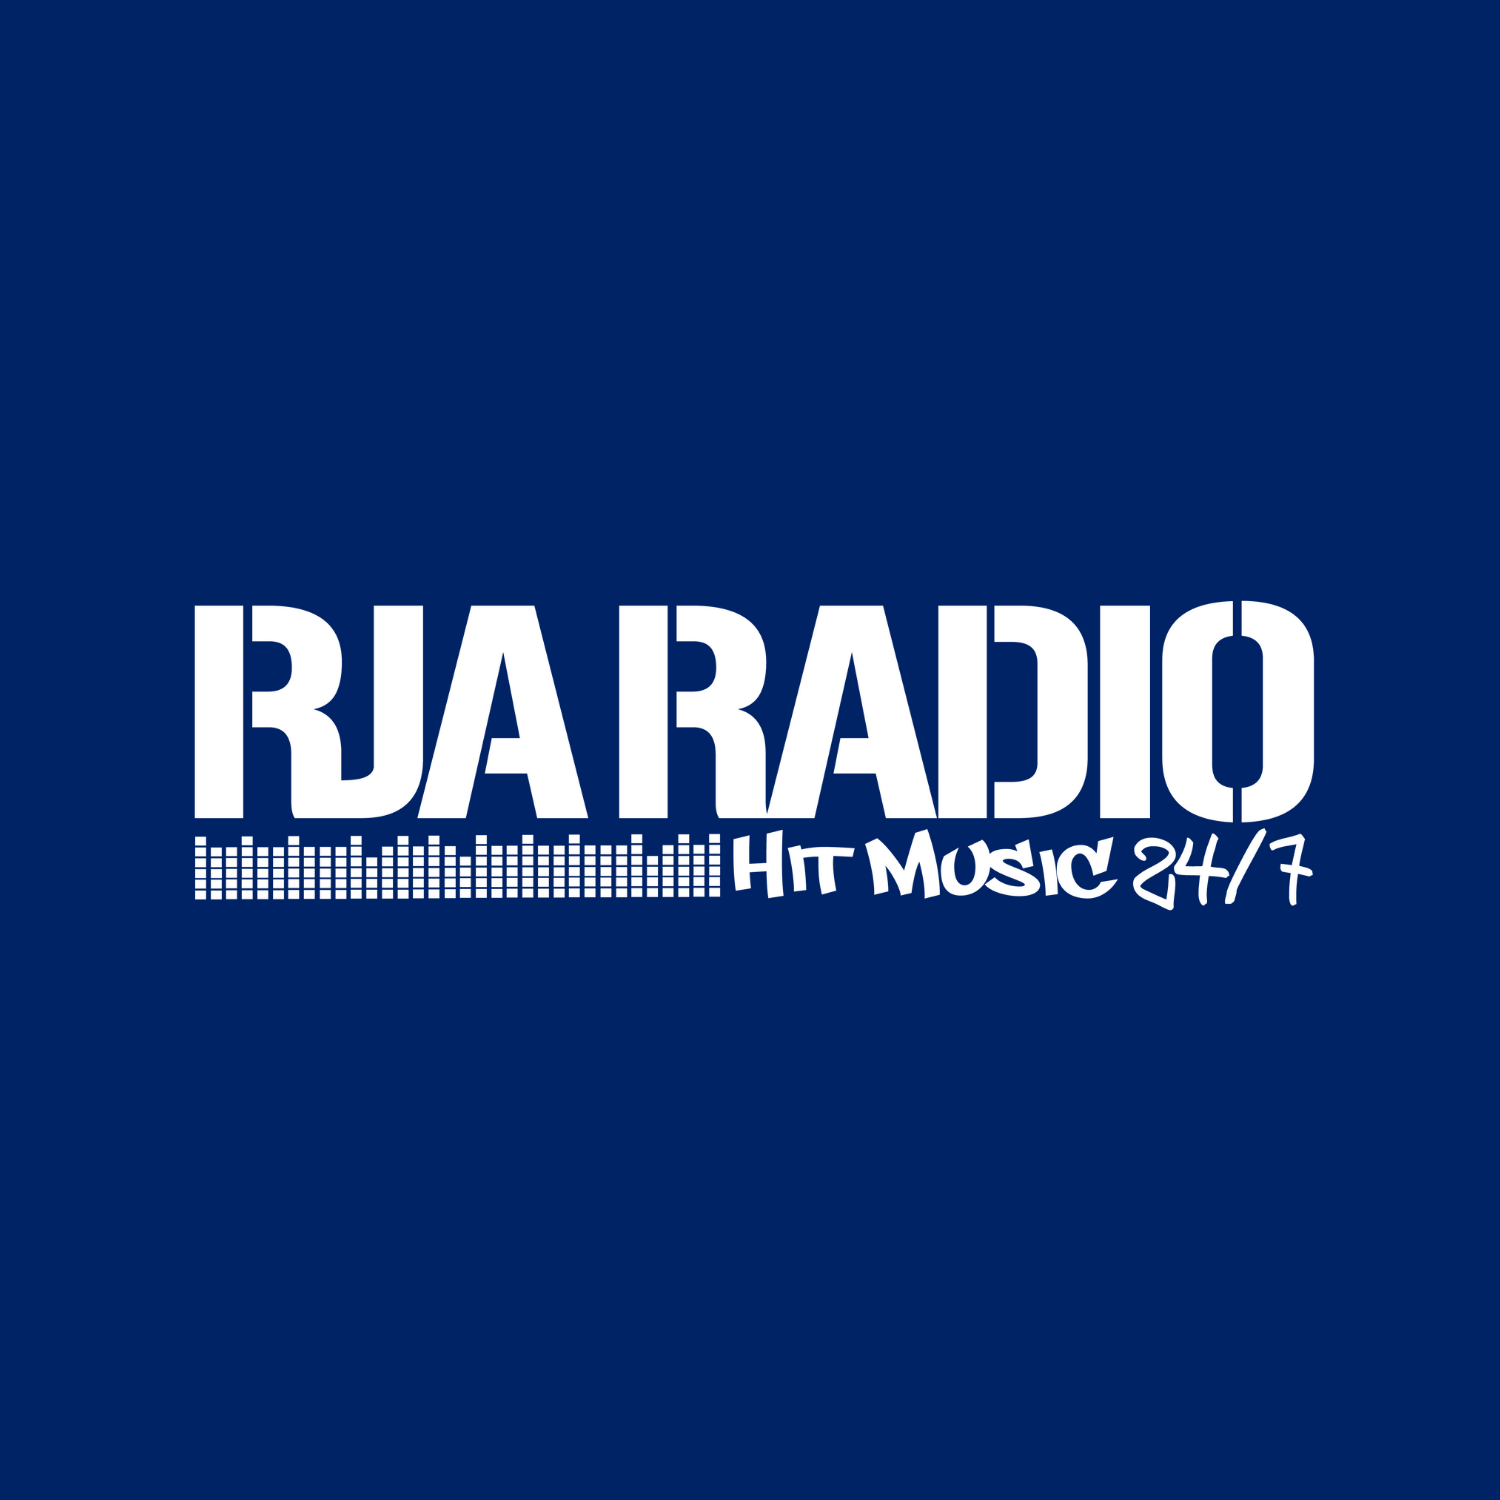 Art for Real Radio  by RJA RADIO